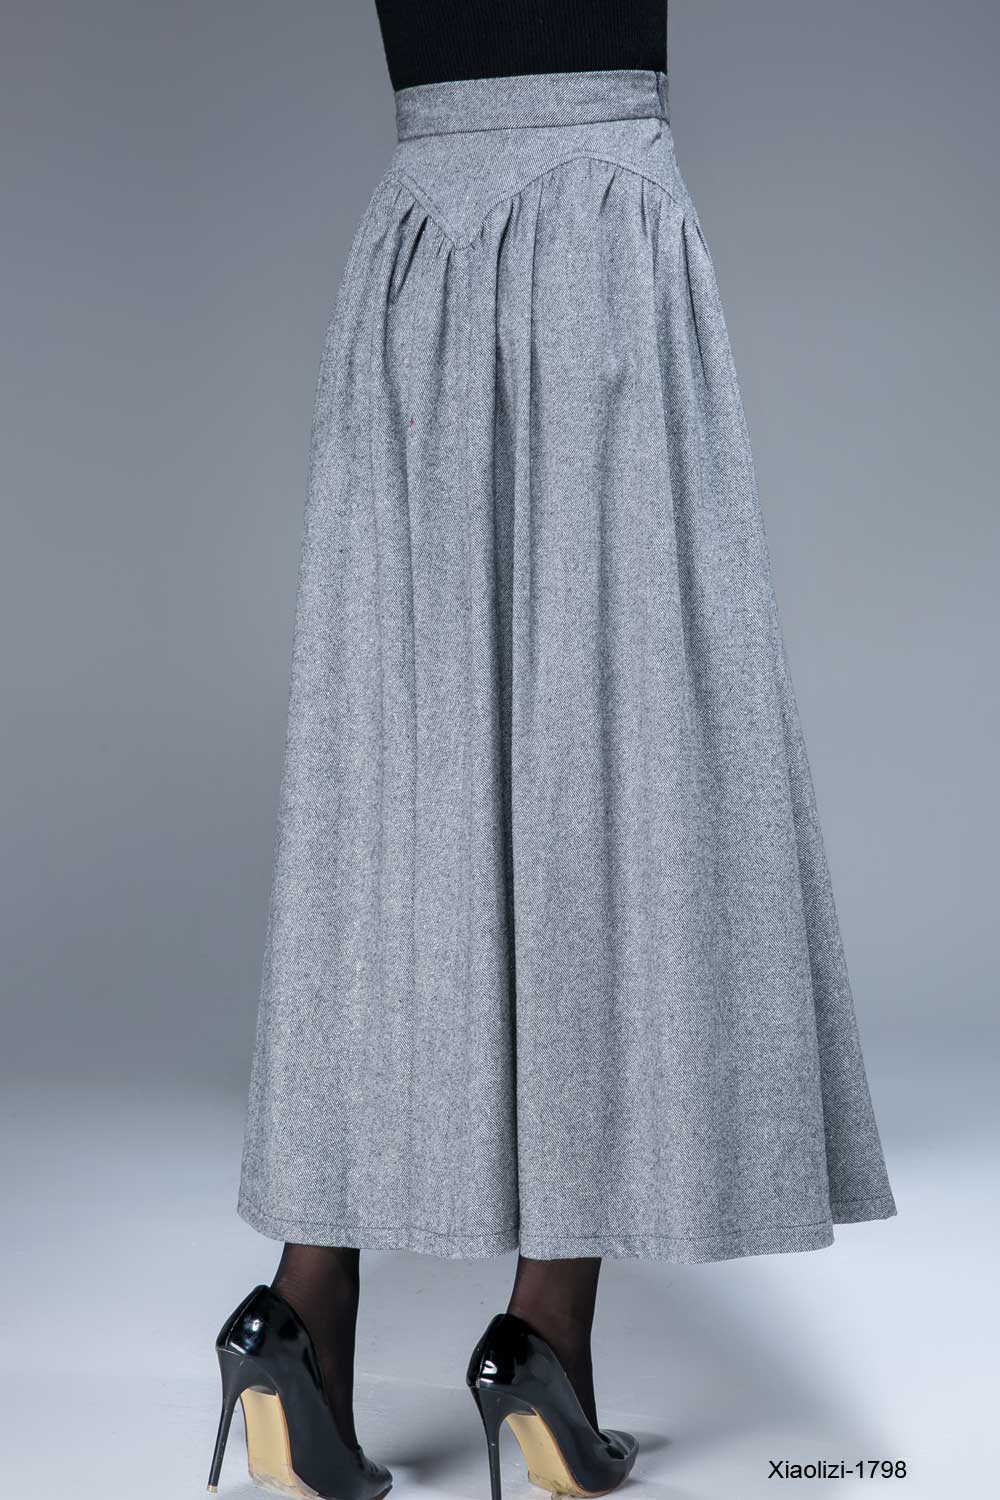 Women's pleated maxi wool skrit for winter in grey 1798#